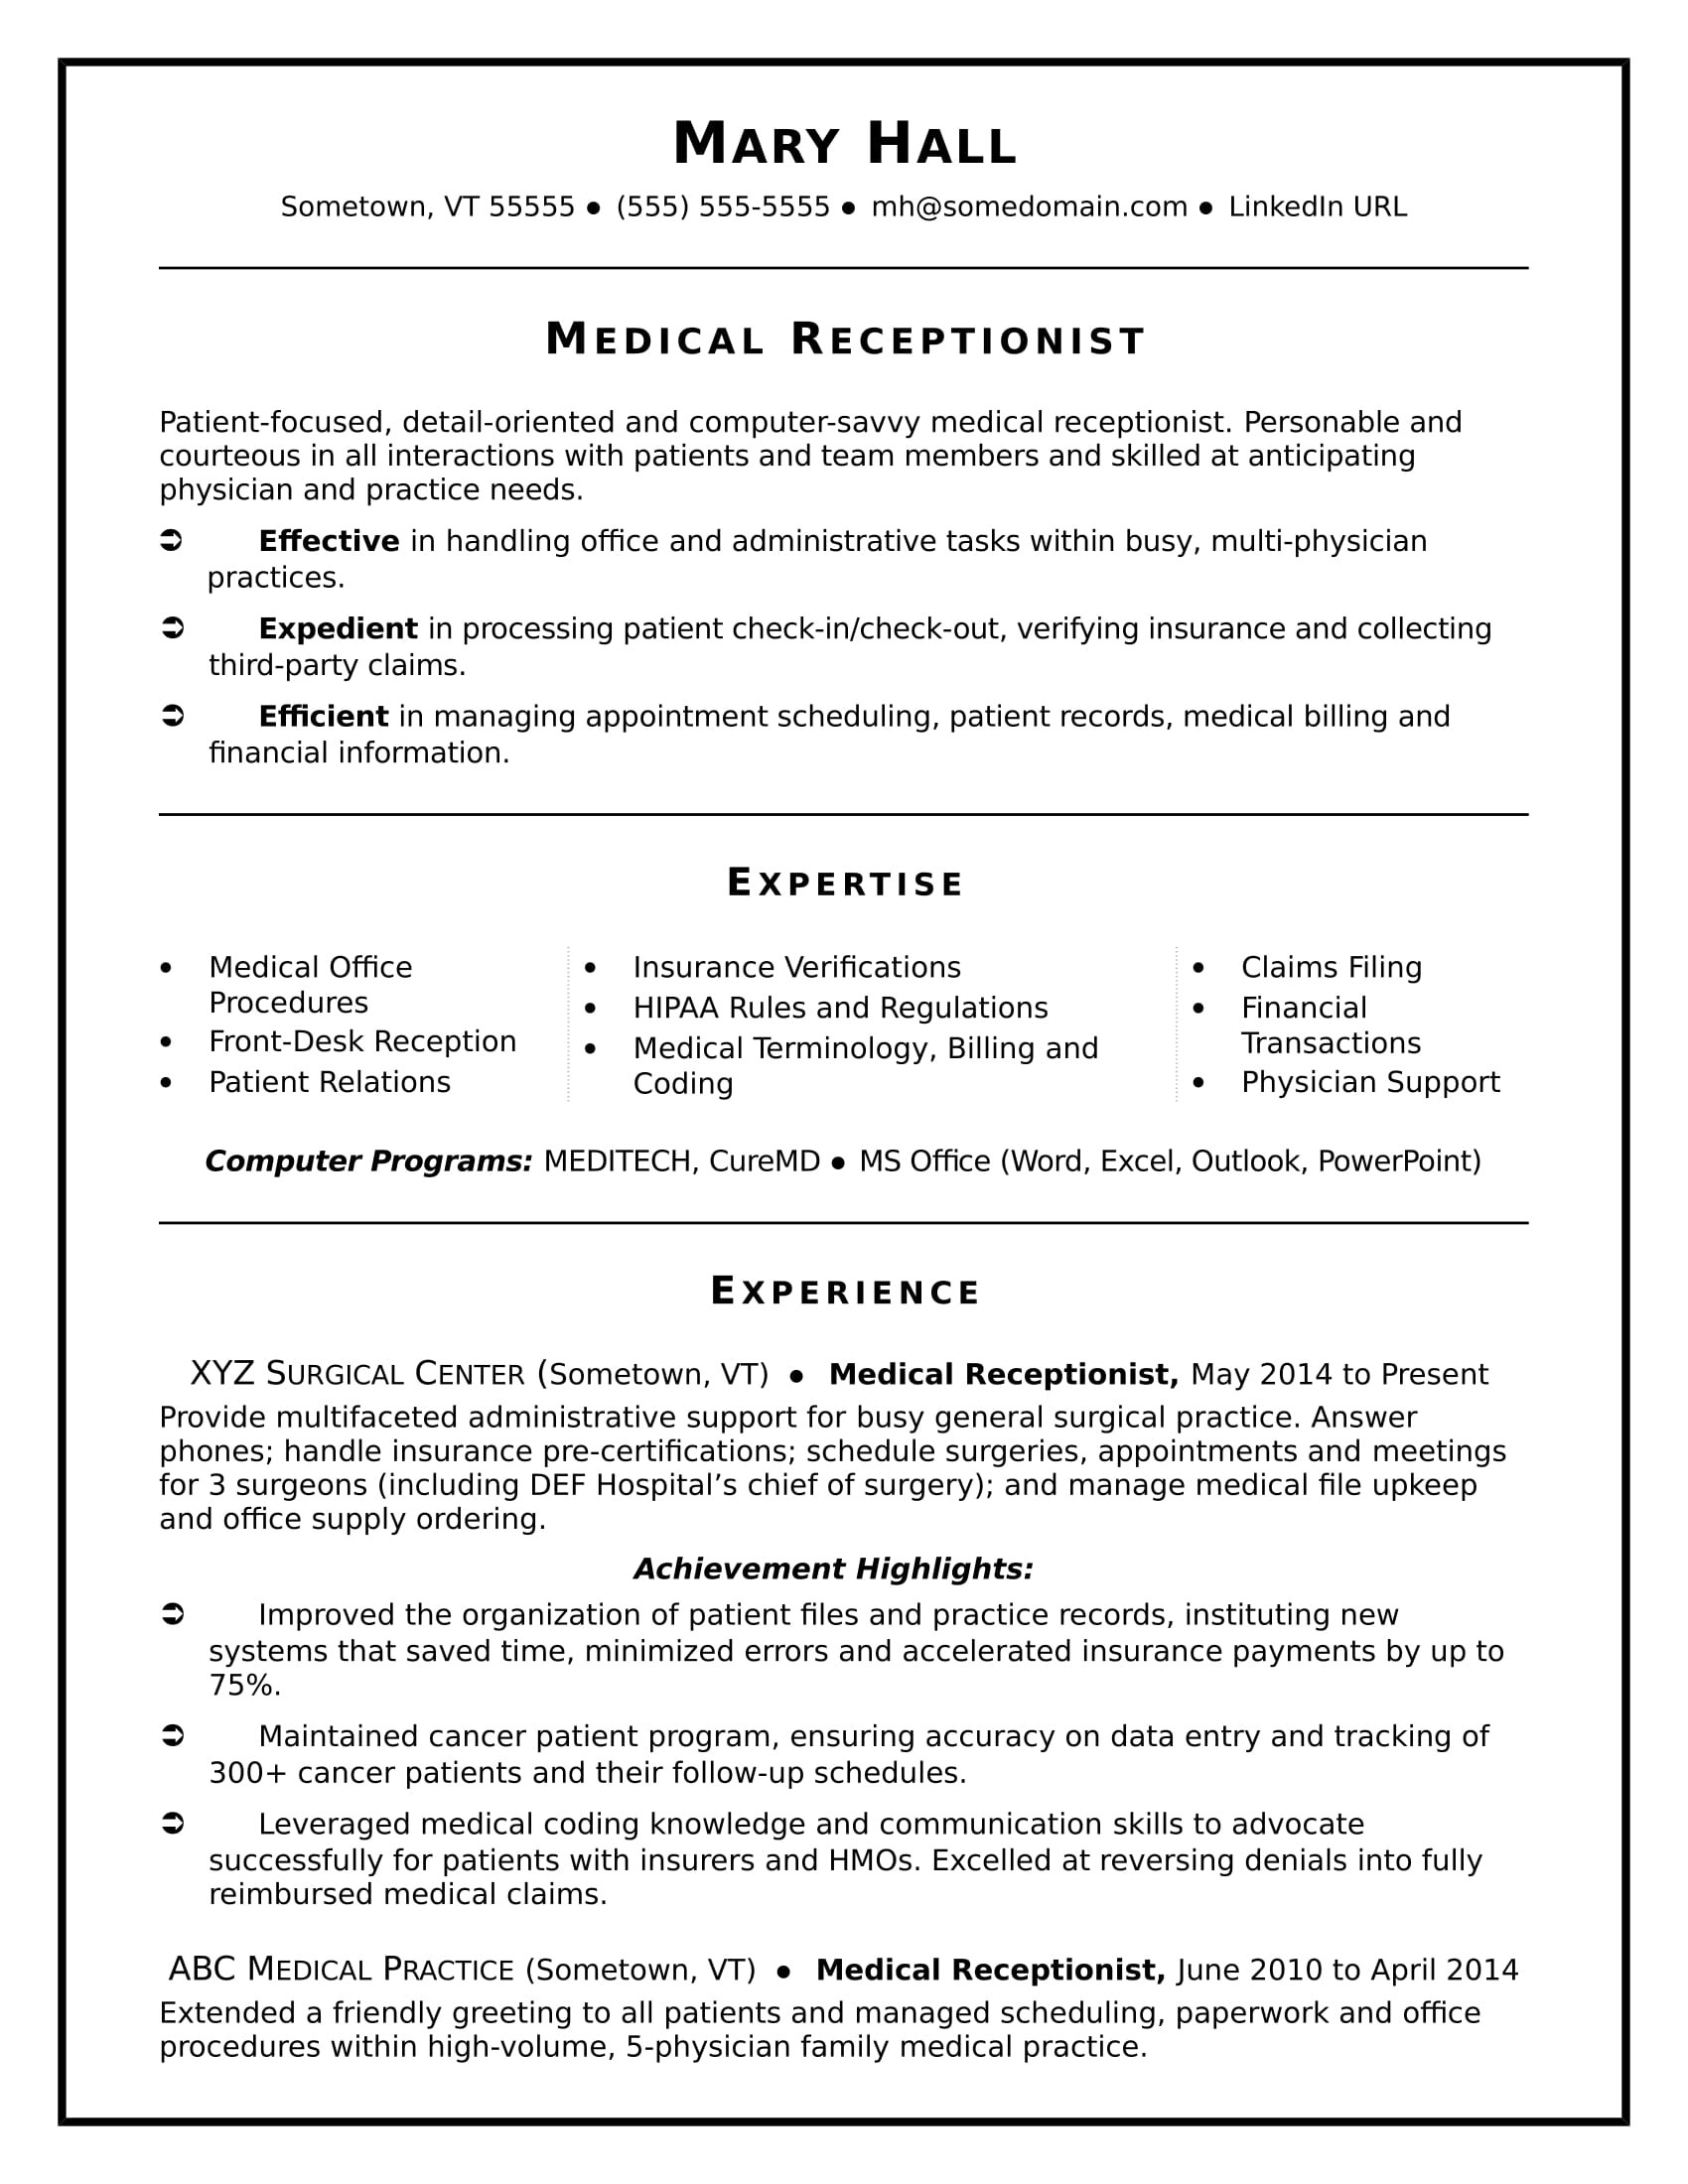 Top Medical Account Manager Resume Sample Medical Receptionist Resume Sample Monster.com